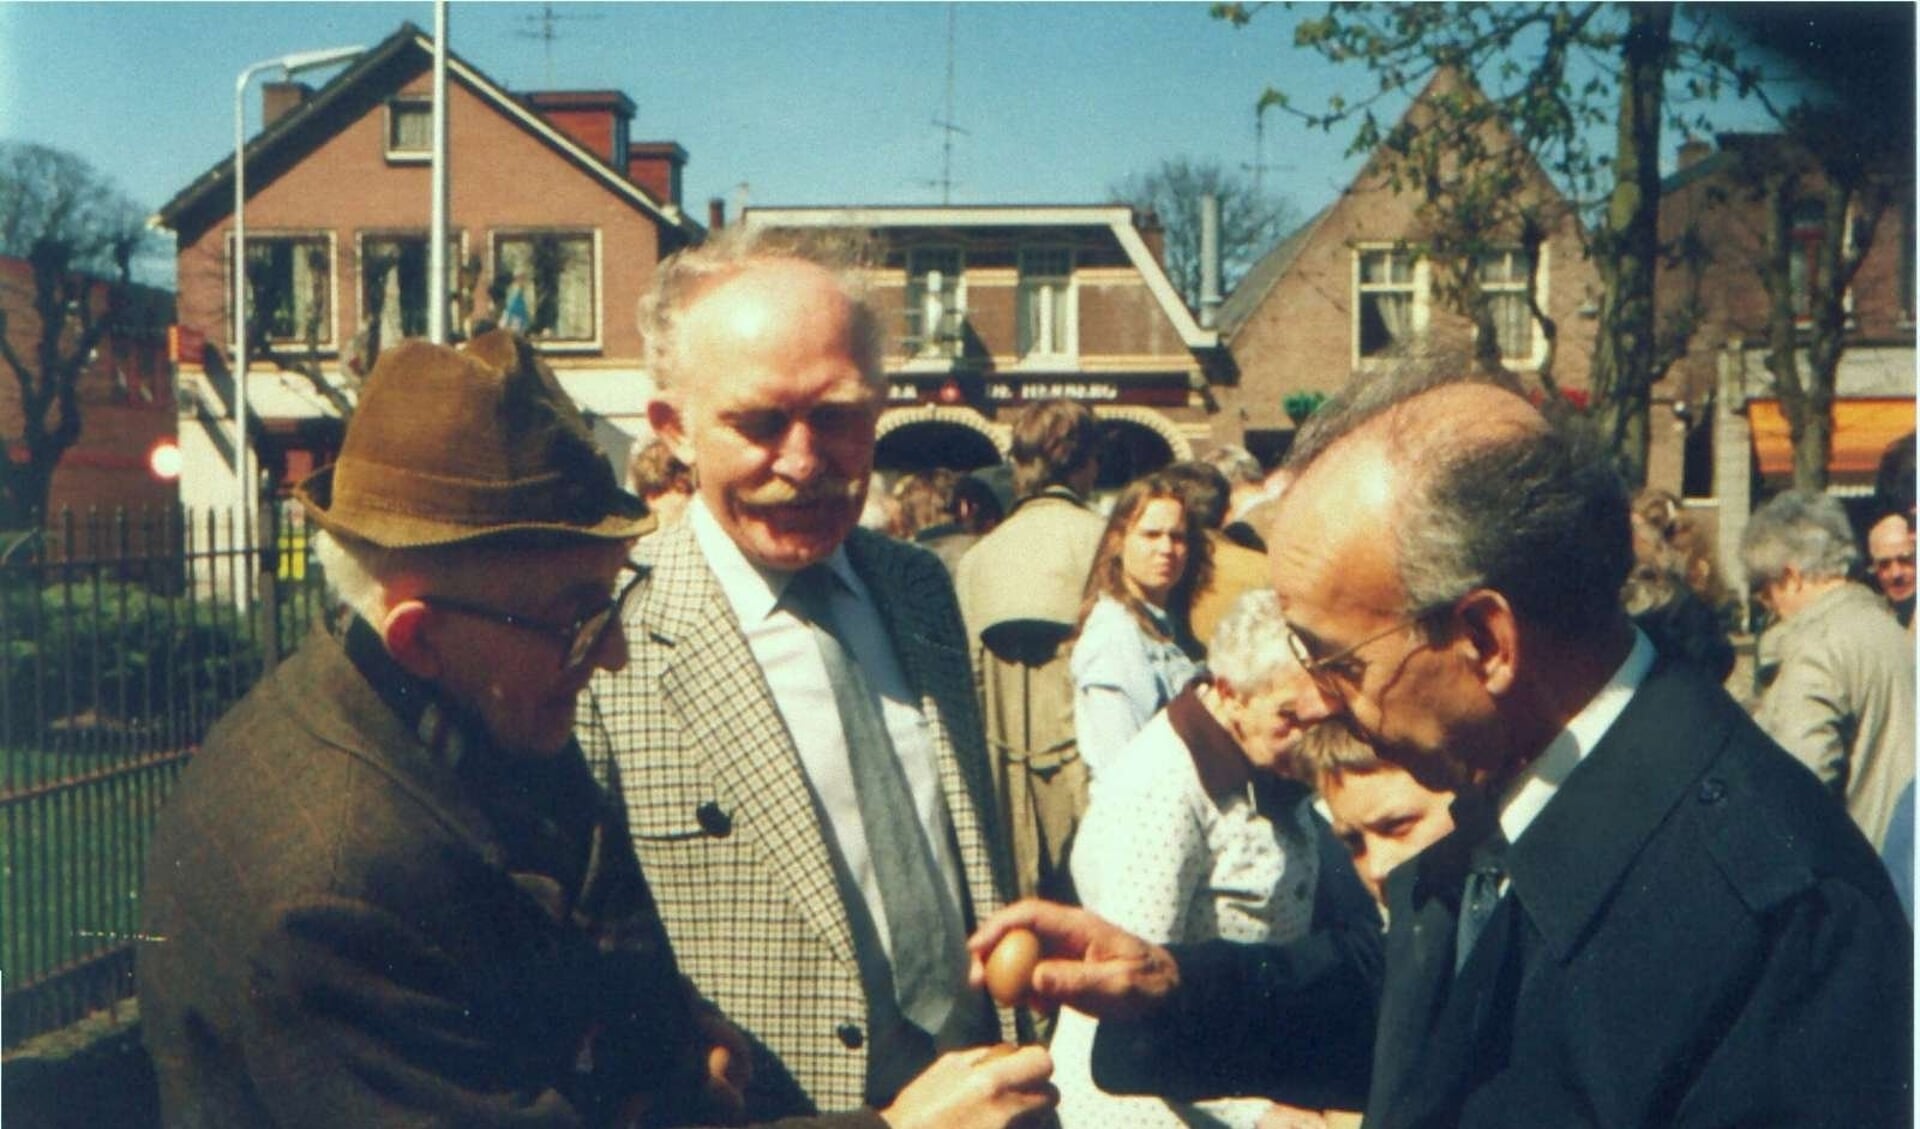 1984. Eiertikken, hier nog op het Kerkplein met v.l.n.r. Martend Makkinga, Gerard Martens en pastoor Flapper